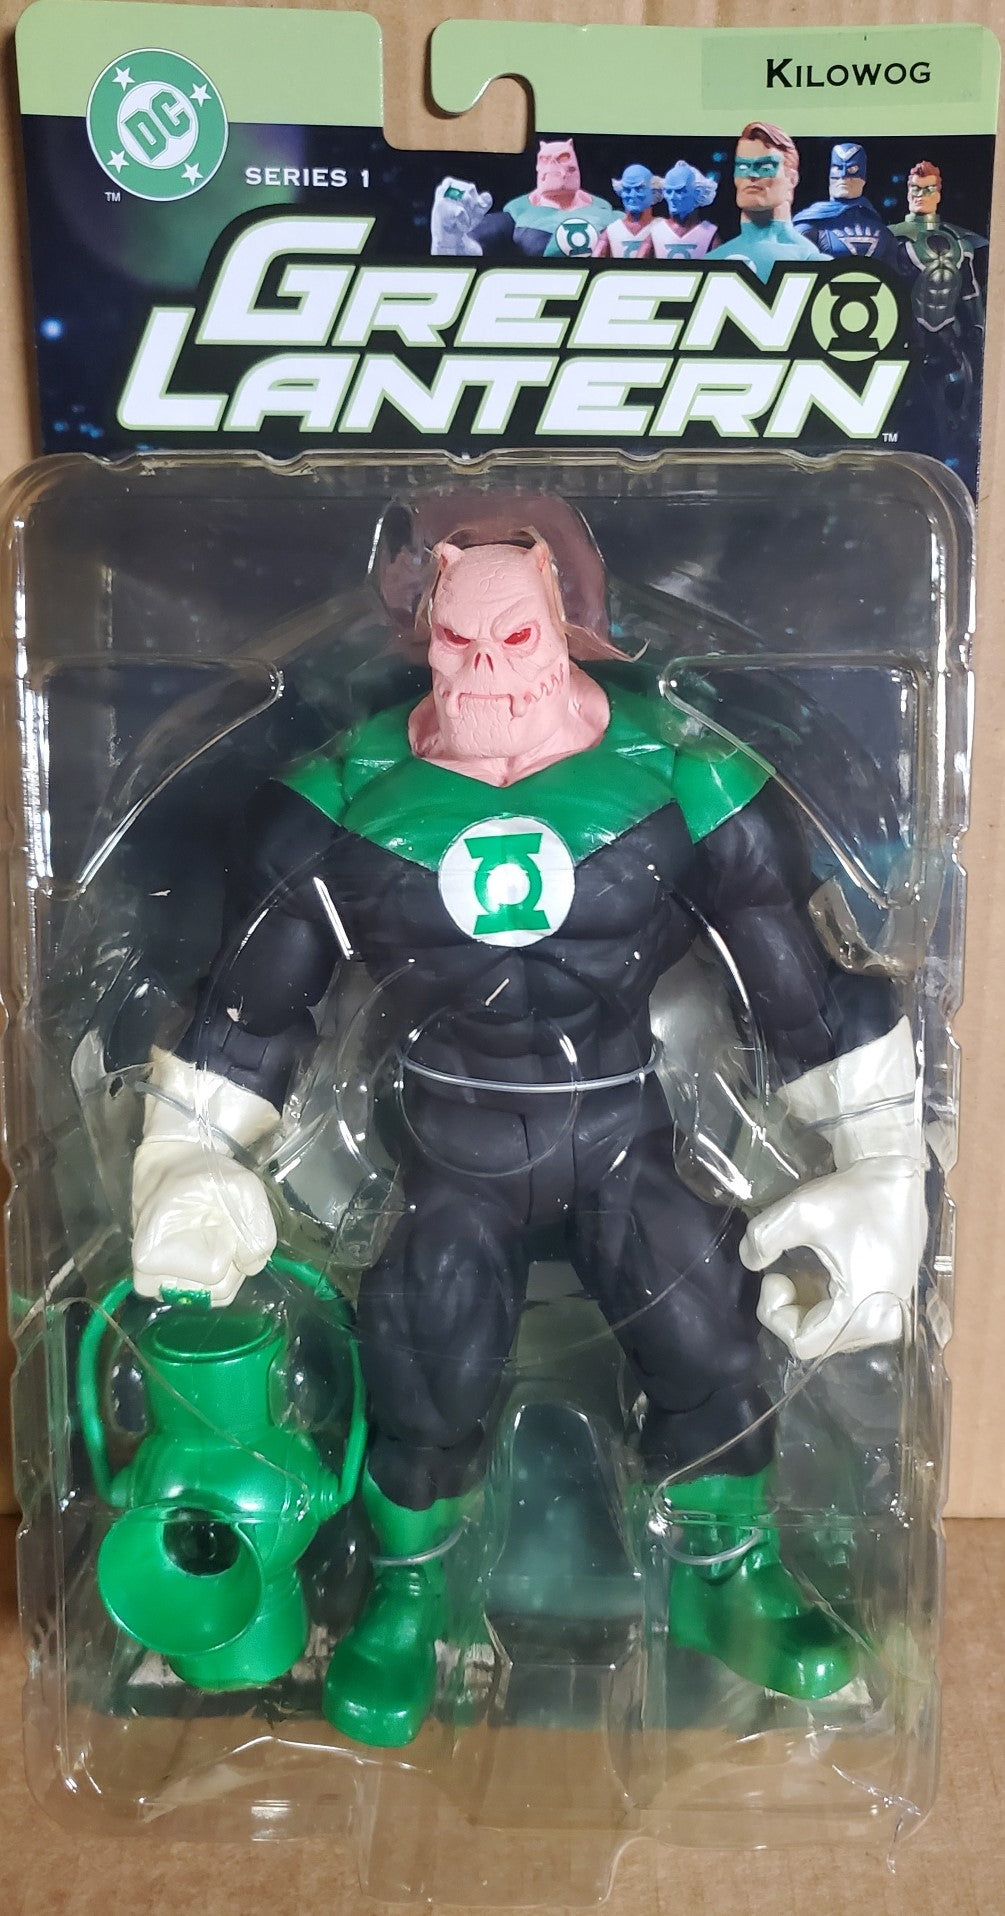 Green Lantern series 1 KILOWOG action figure